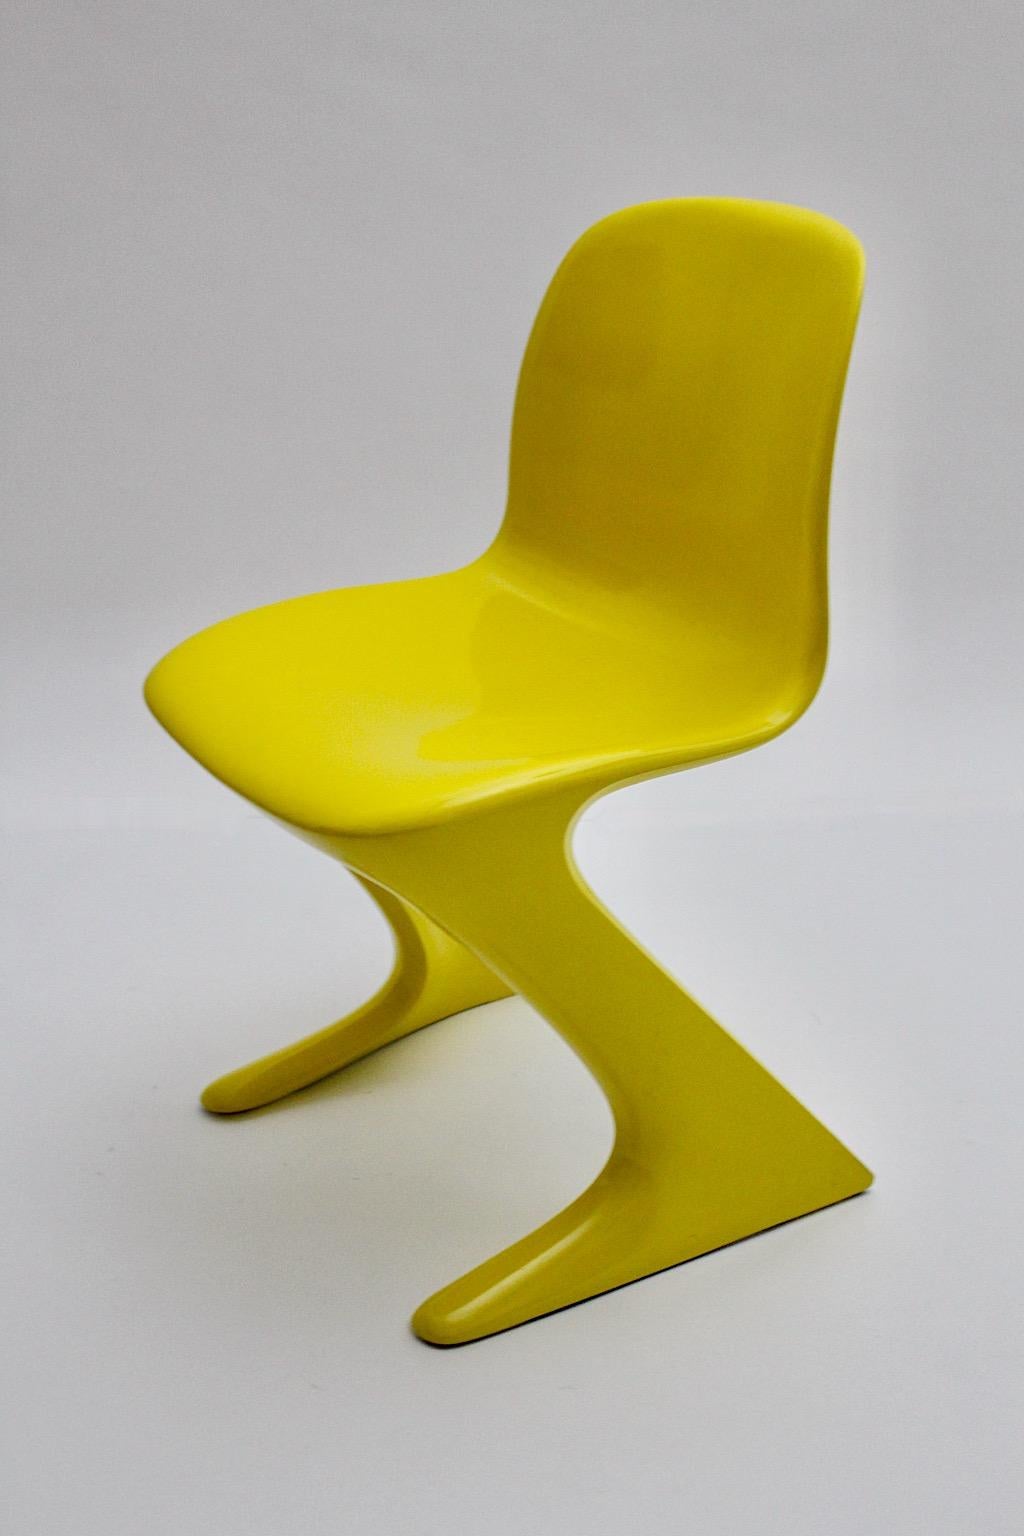 Space Age Vintage Gelber Kunststoffstuhl Kangaroo-Stuhl Ernst Moeckl 1960er Jahre Deutschland im Angebot 6